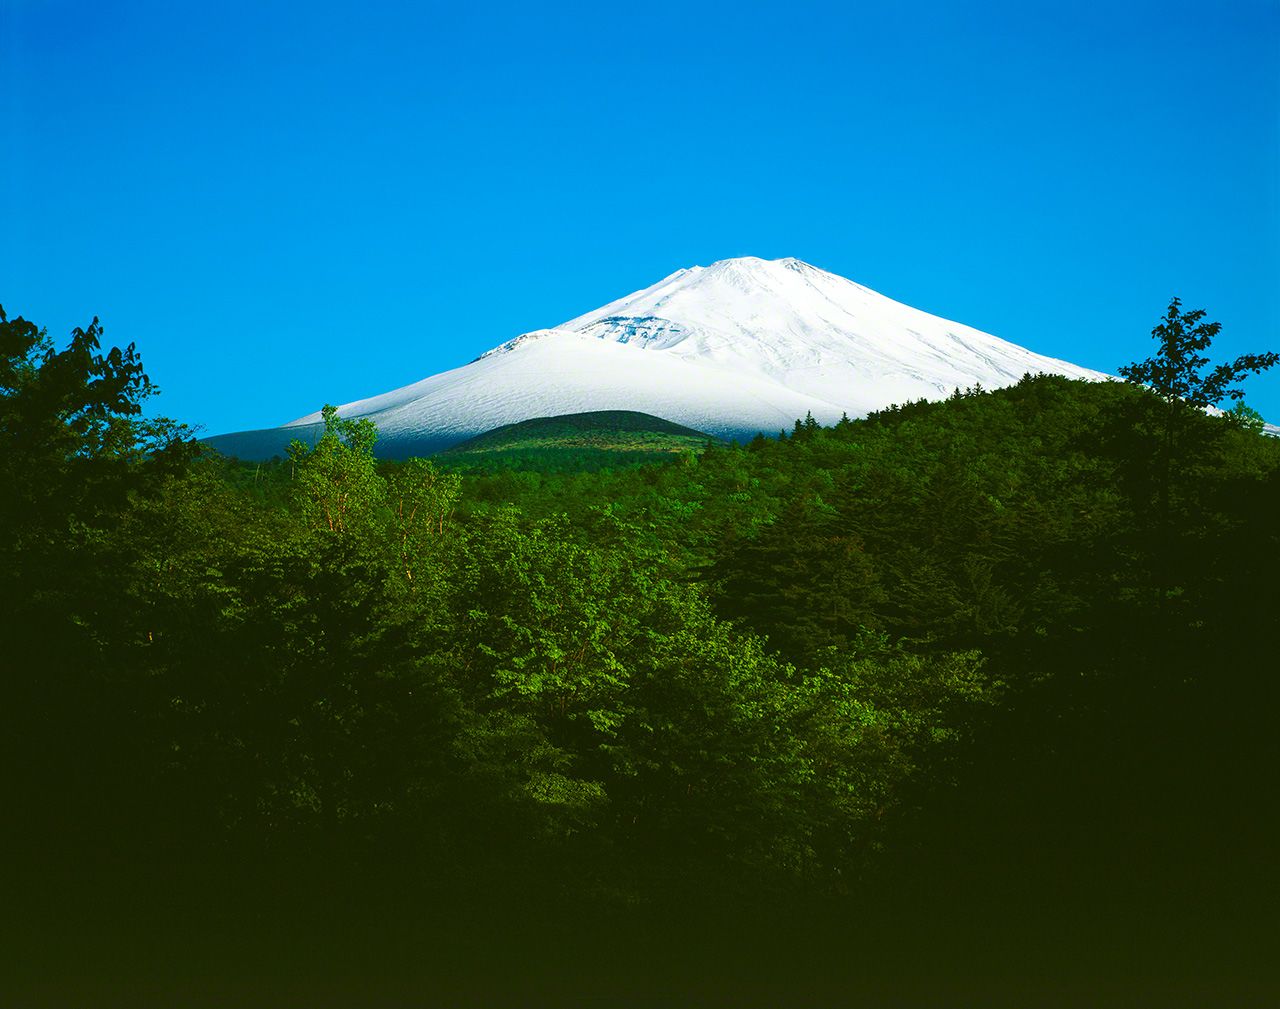 Viewing the mountain from Akatsuka.